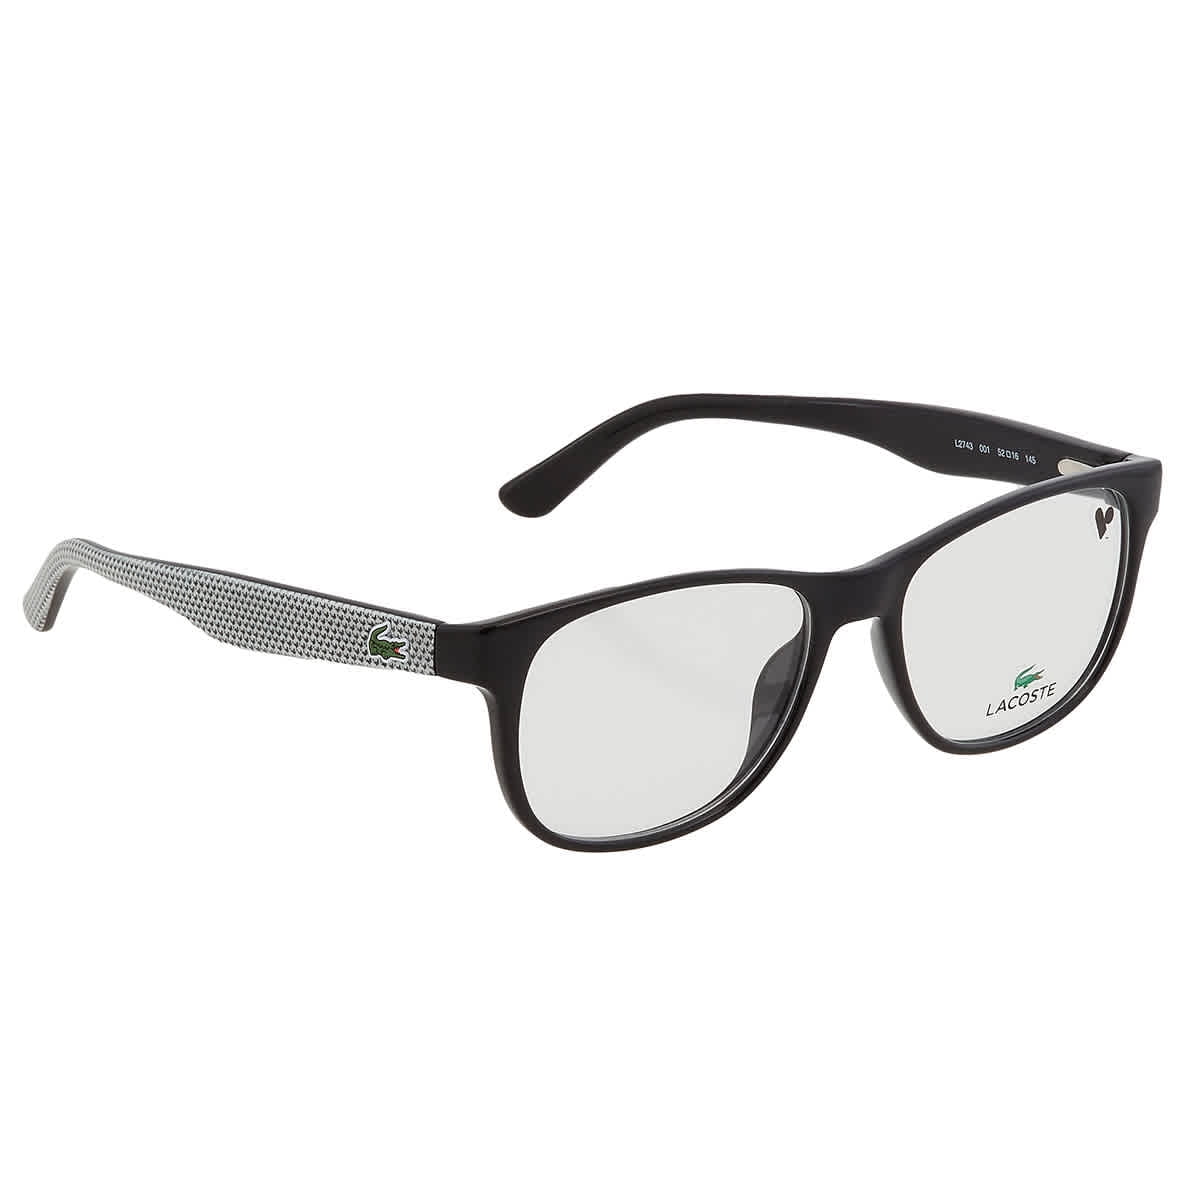 Lacoste Demo Rectangular Unisex Eyeglasses L2743 001 52